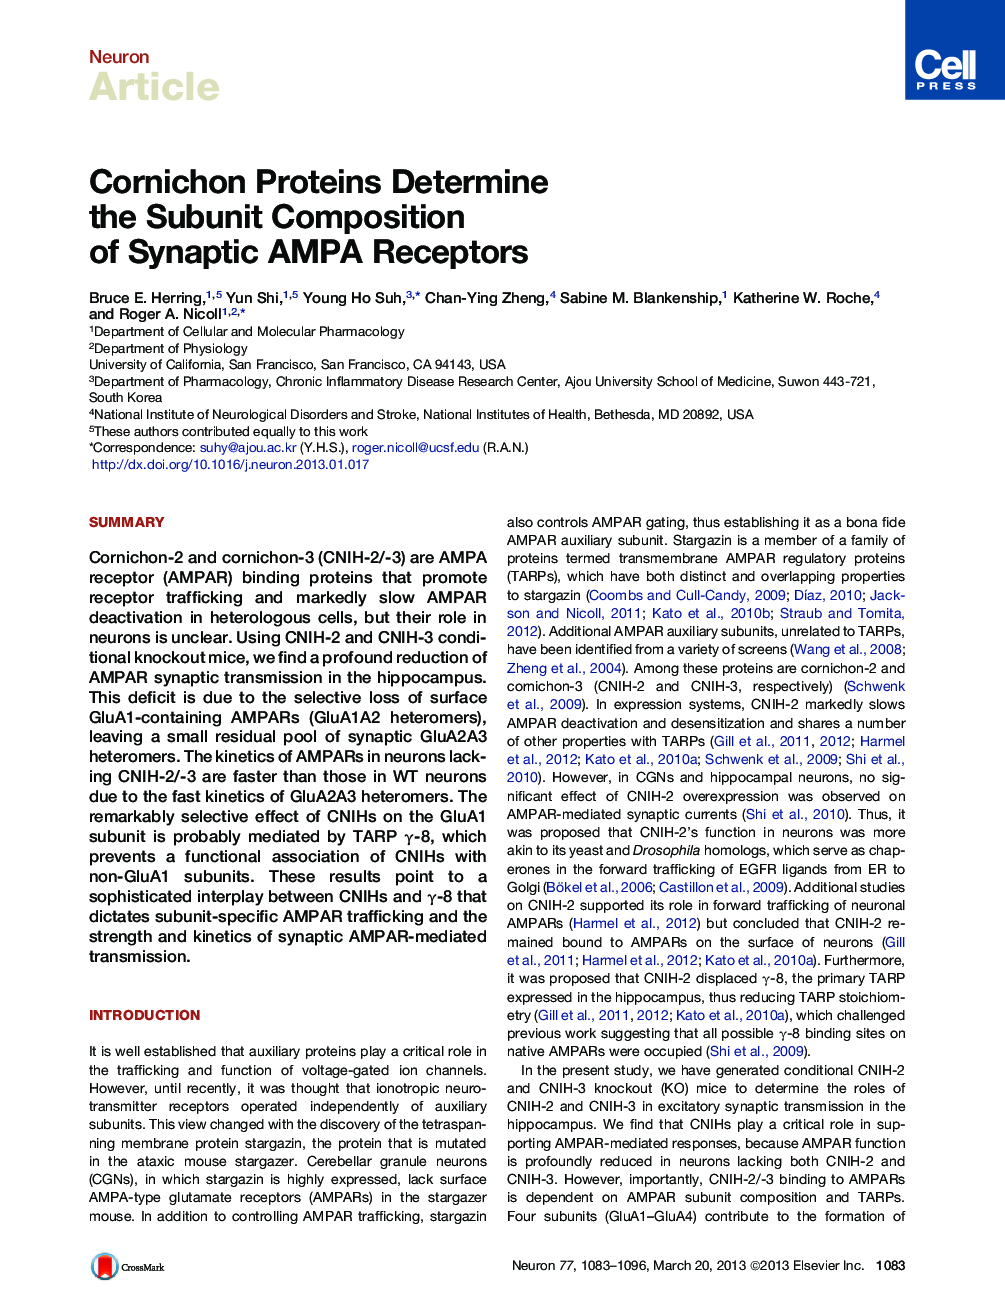 Cornichon Proteins Determine the Subunit Composition of Synaptic AMPA Receptors